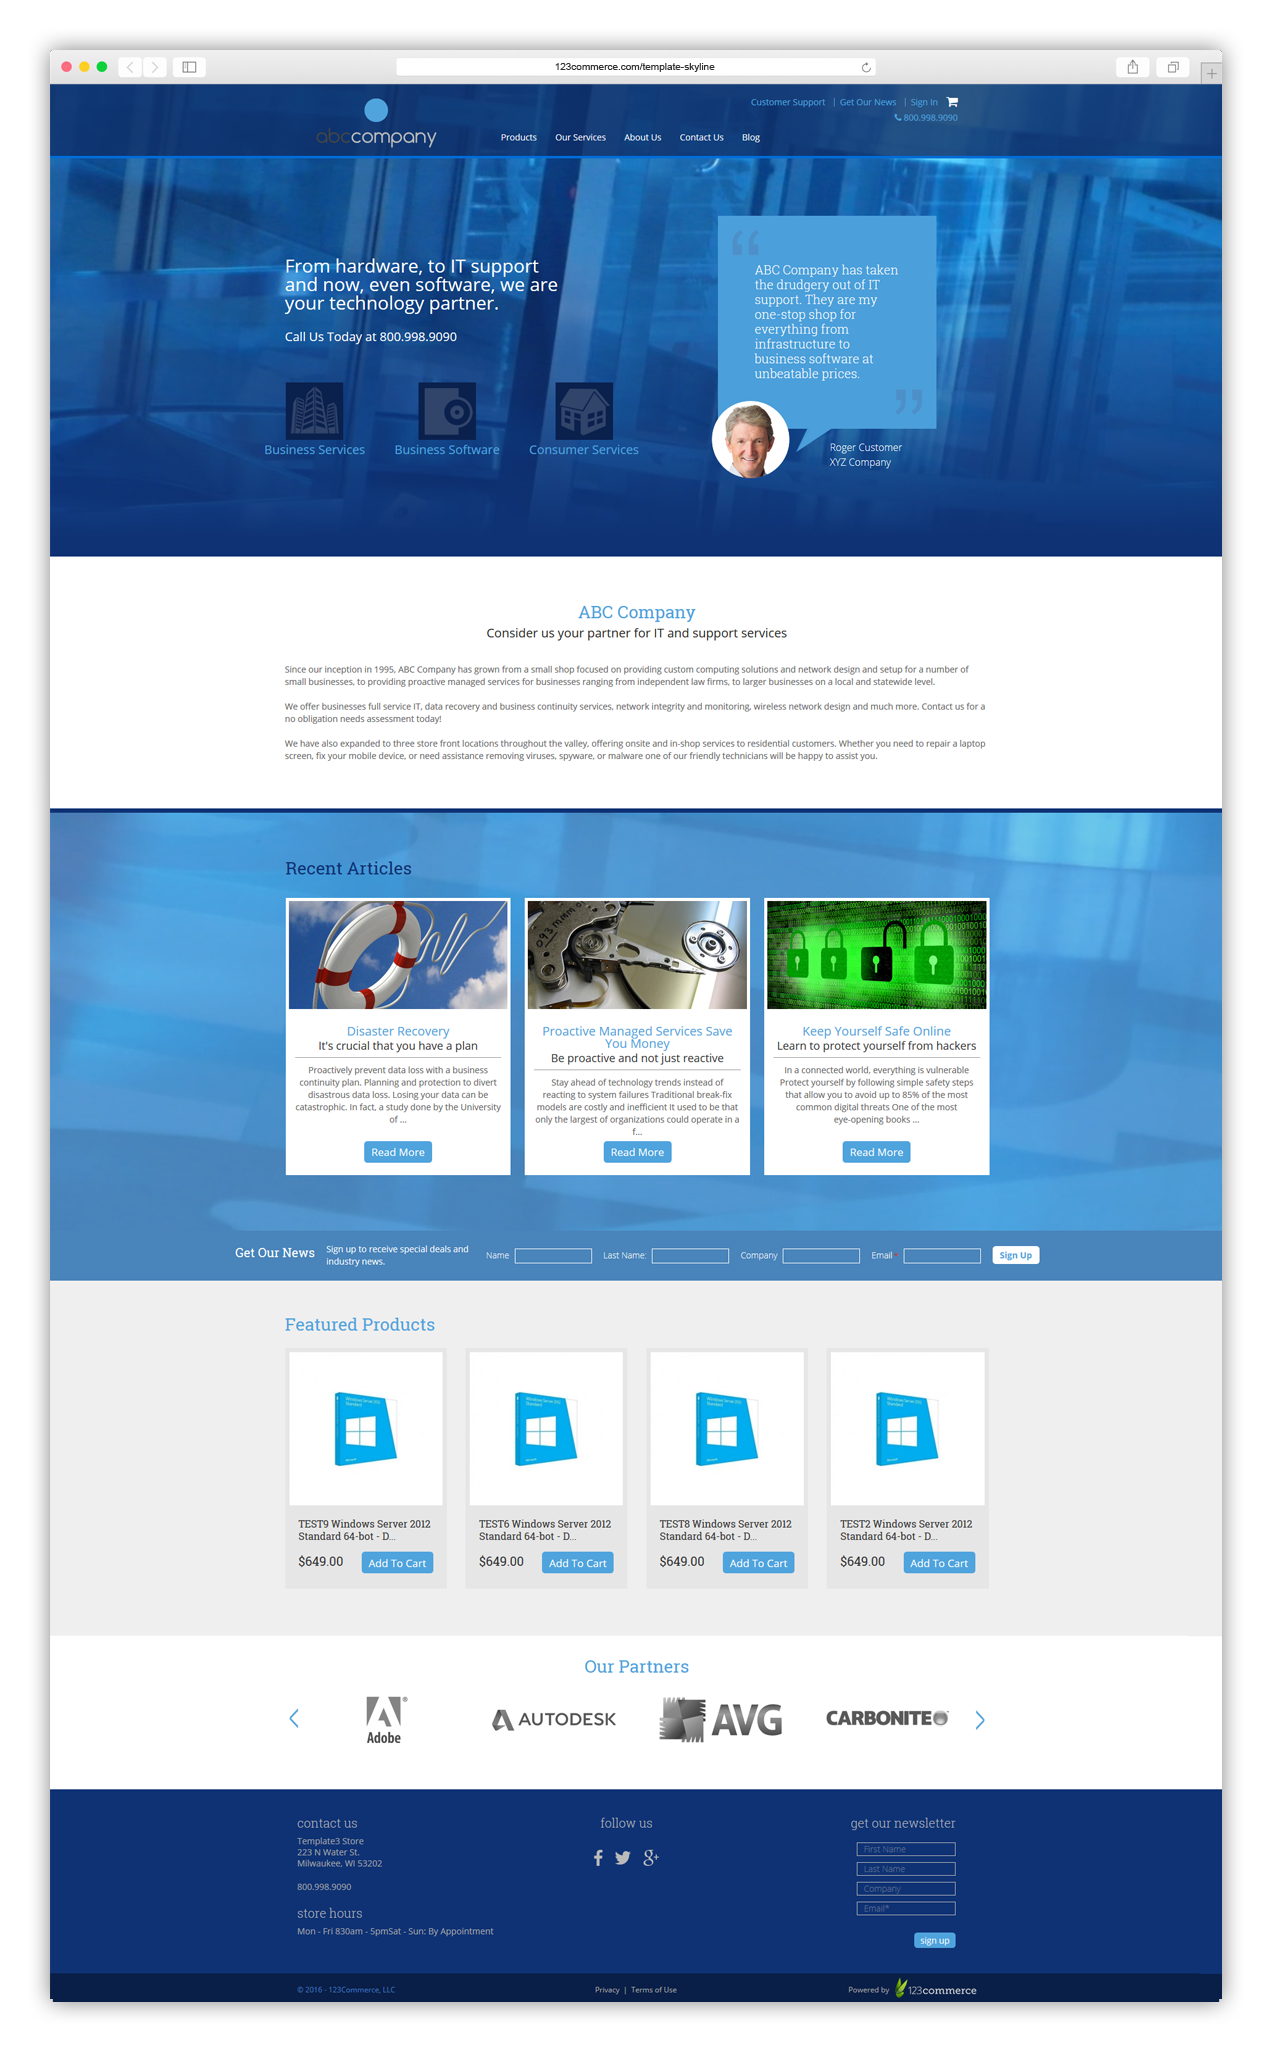 White and blue desktop template, reminiscent of Windows branding